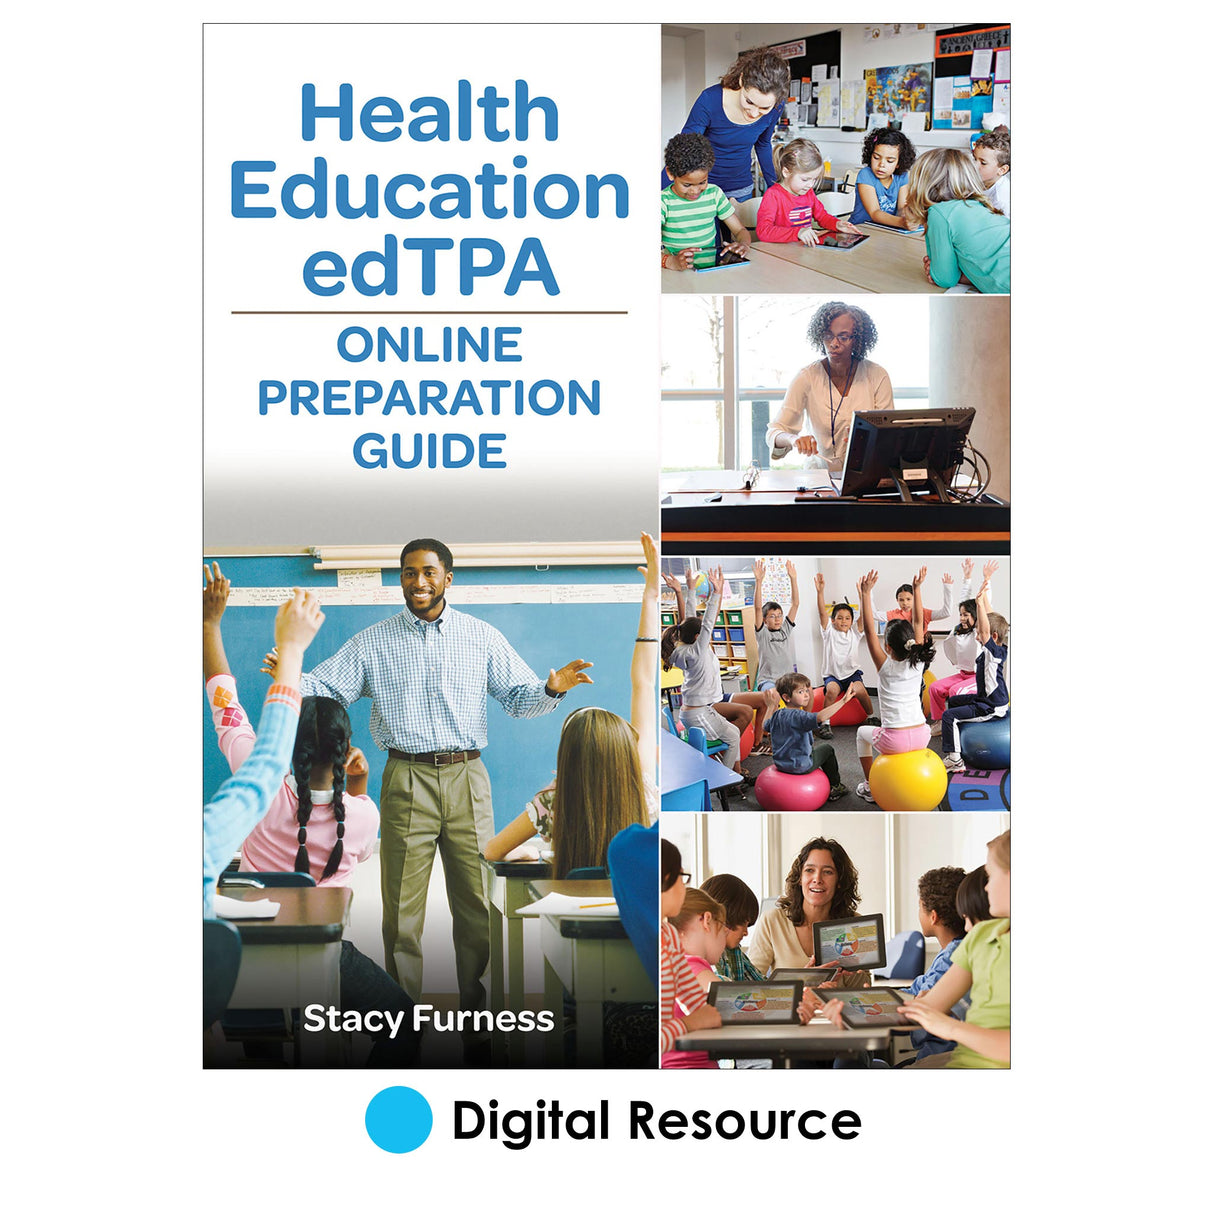 Health Education edTPA Online Preparation Guide